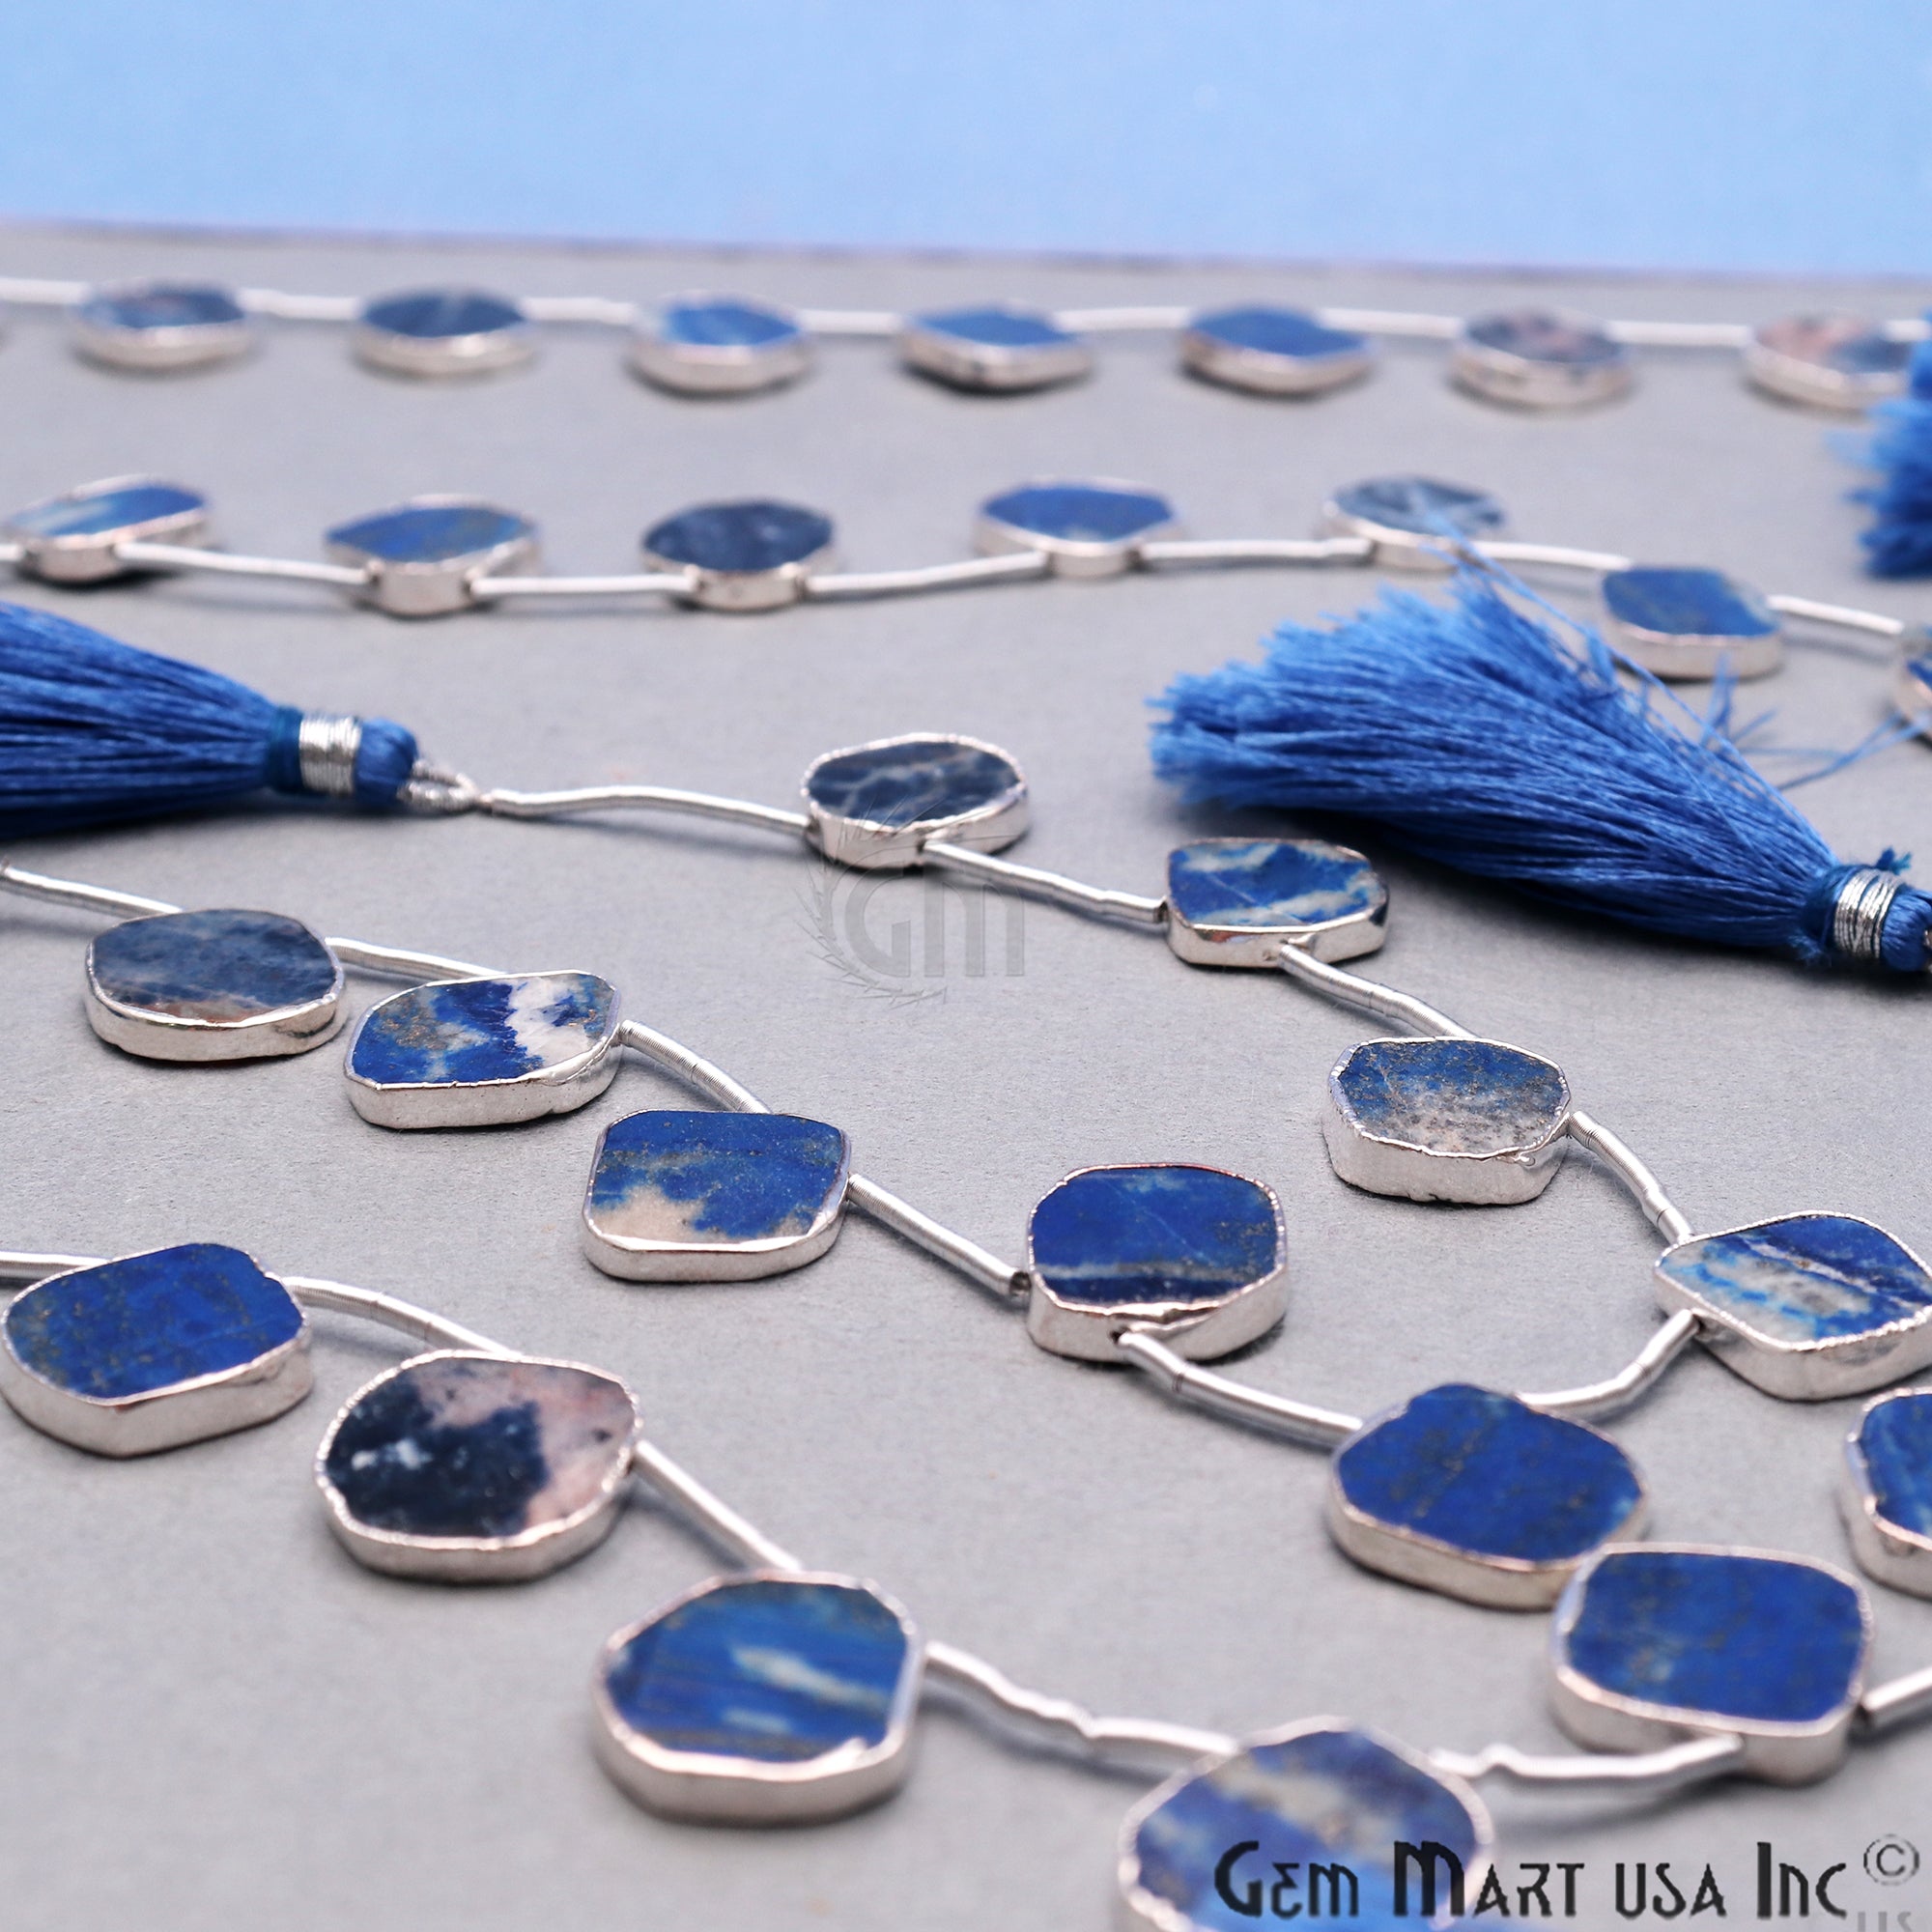 Lapis Free Form 15x18mm Crafting Beads Gemstone Strands 9INCH - GemMartUSA